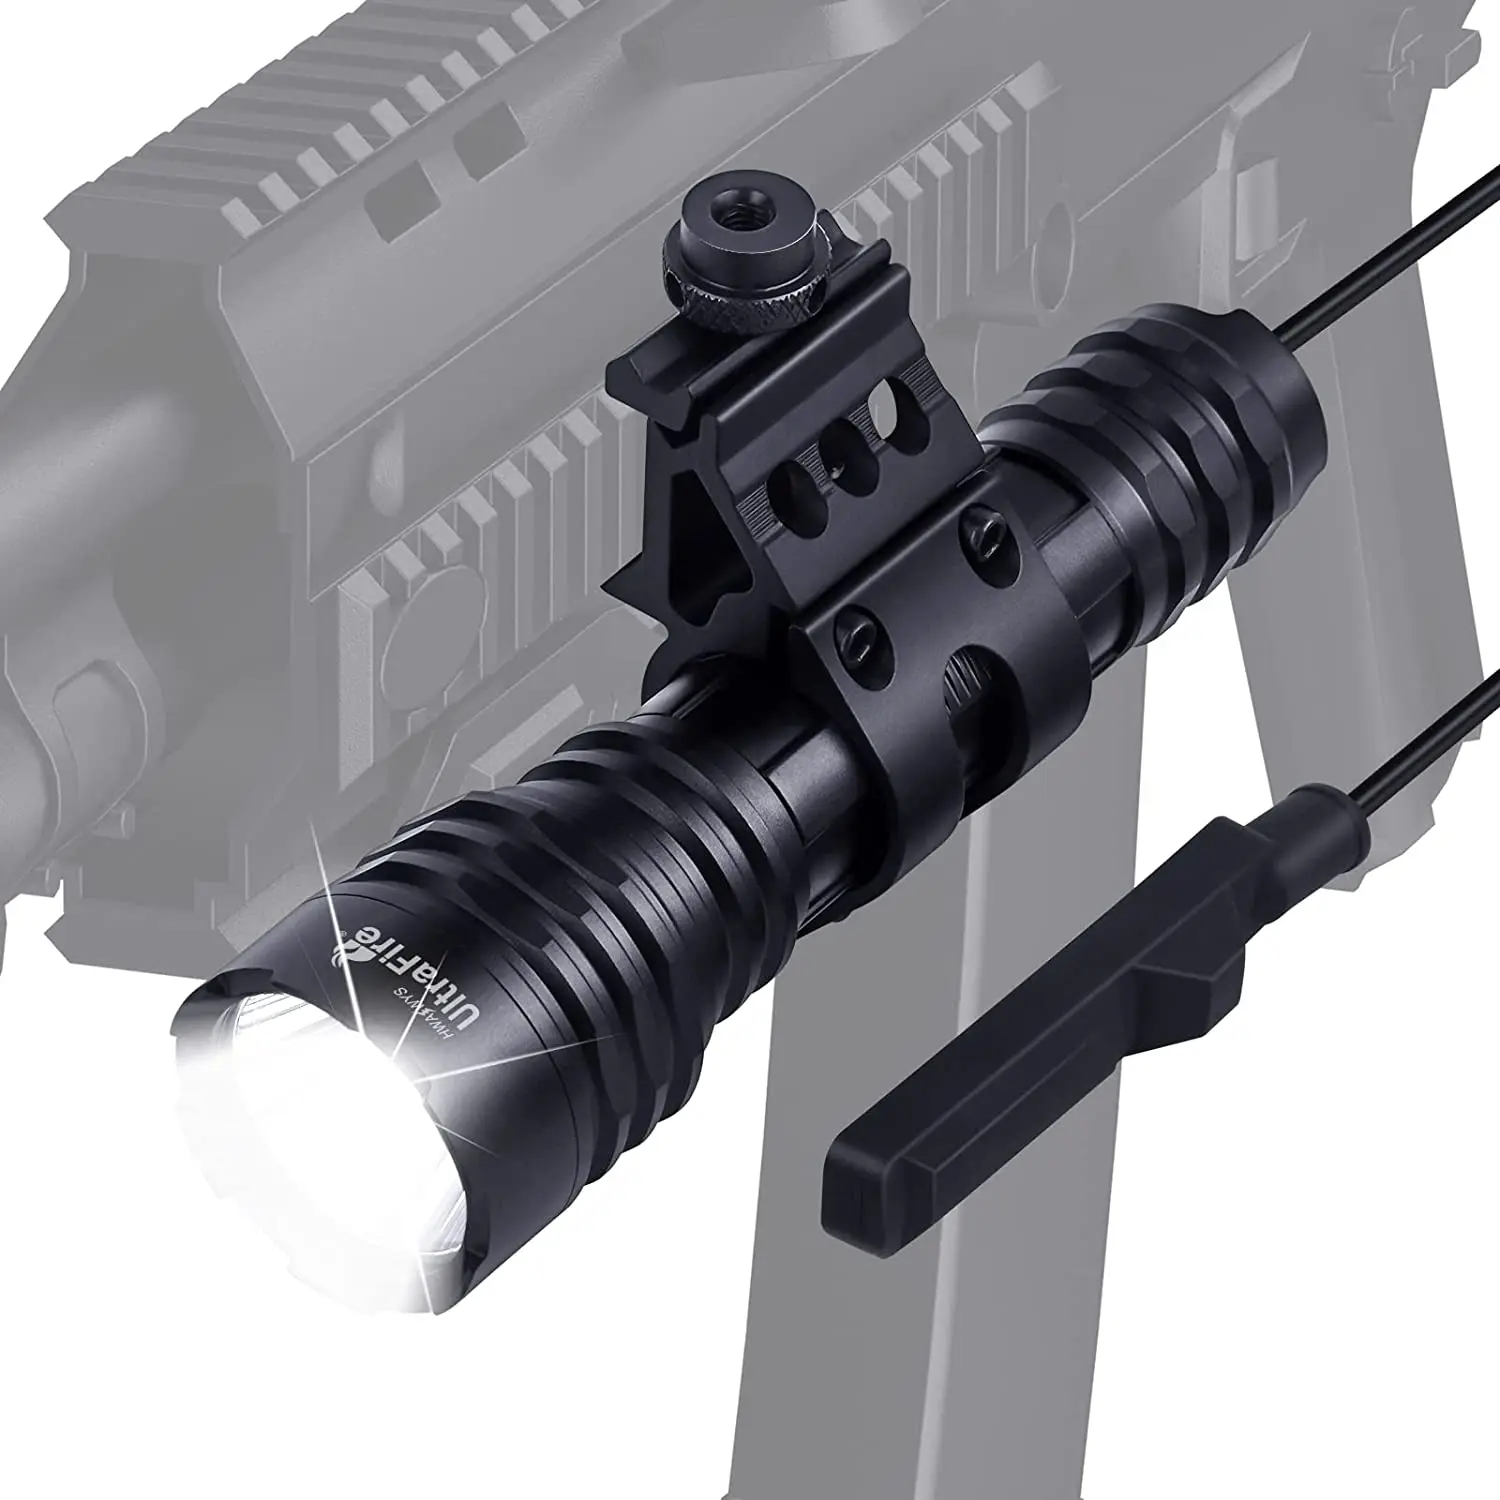 

Ultrafire V21 Super Bright 18650 High Lumen LED Flashlight Hunting Camping Powerful Handheld Combat Torch Light